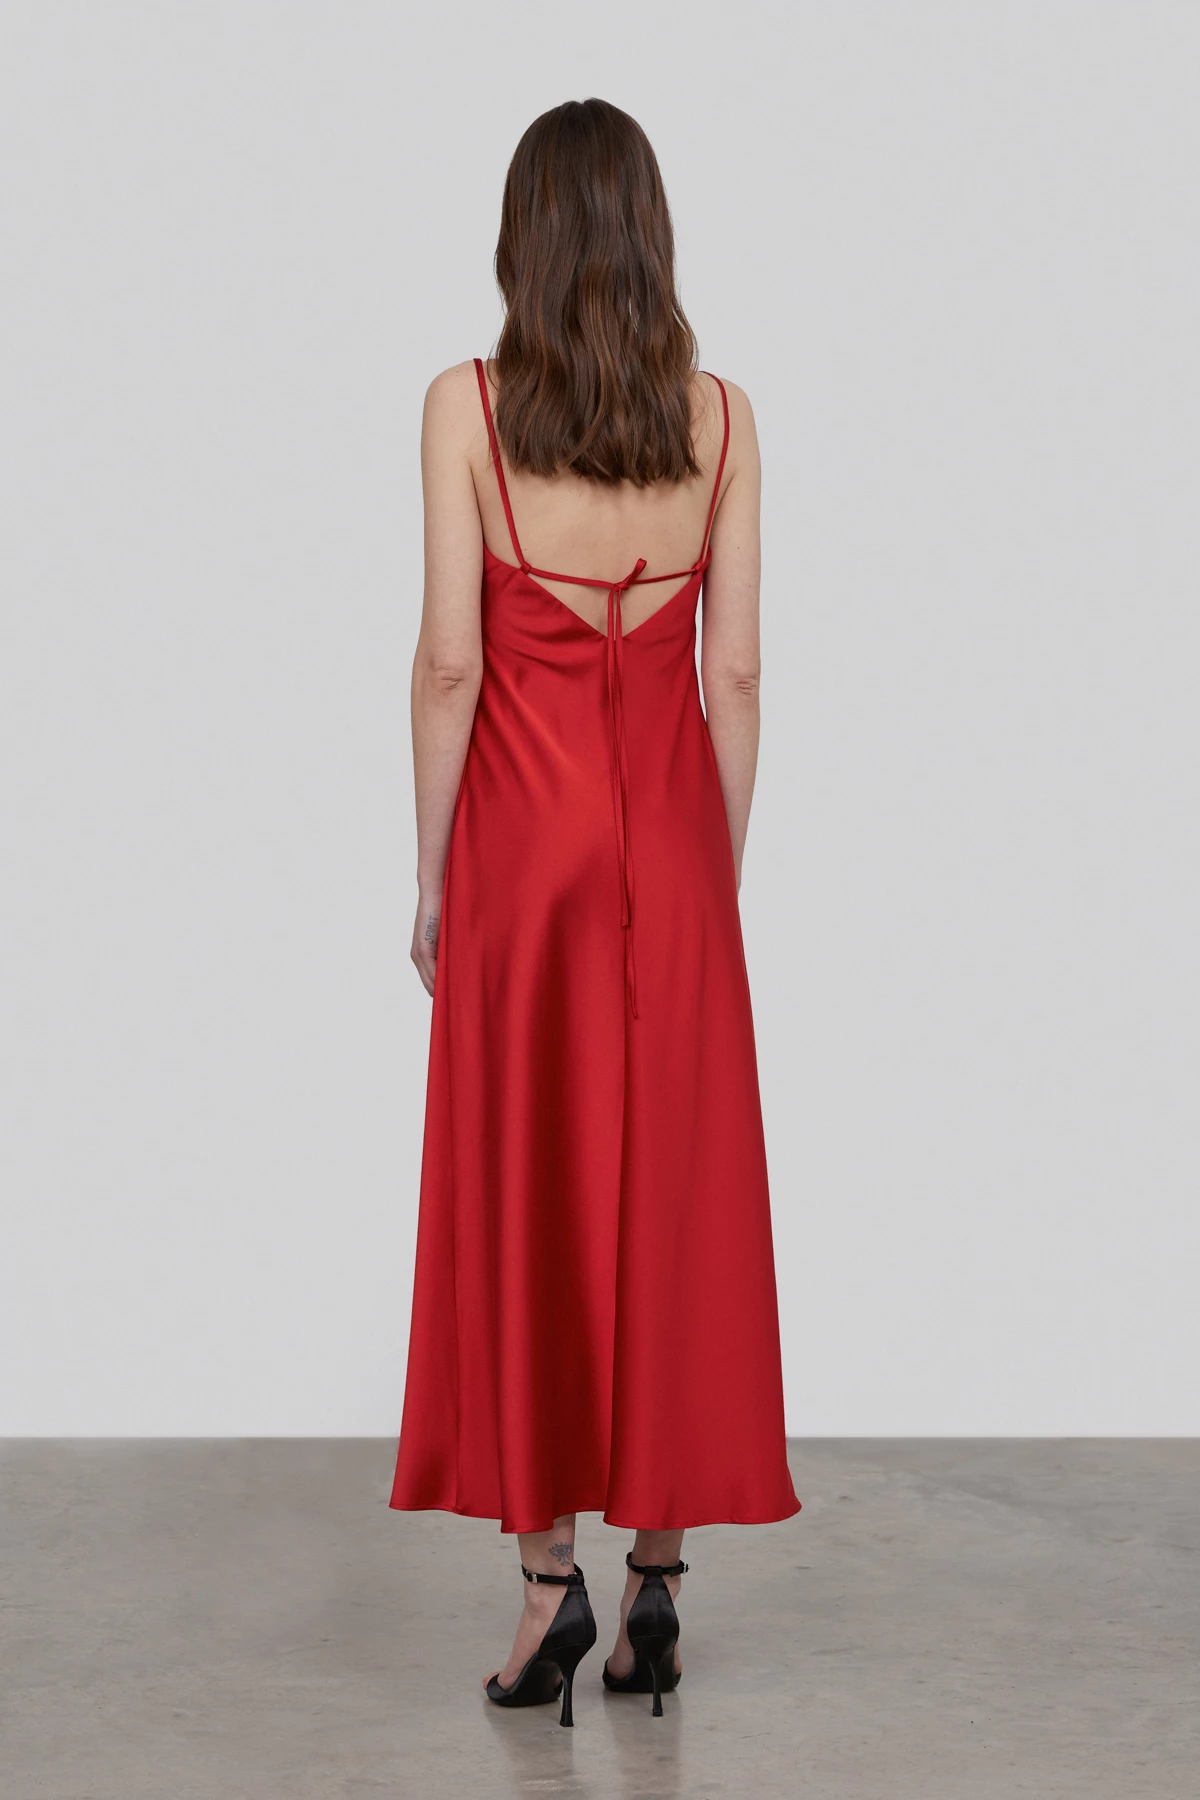 Red satin slip dress, photo 3